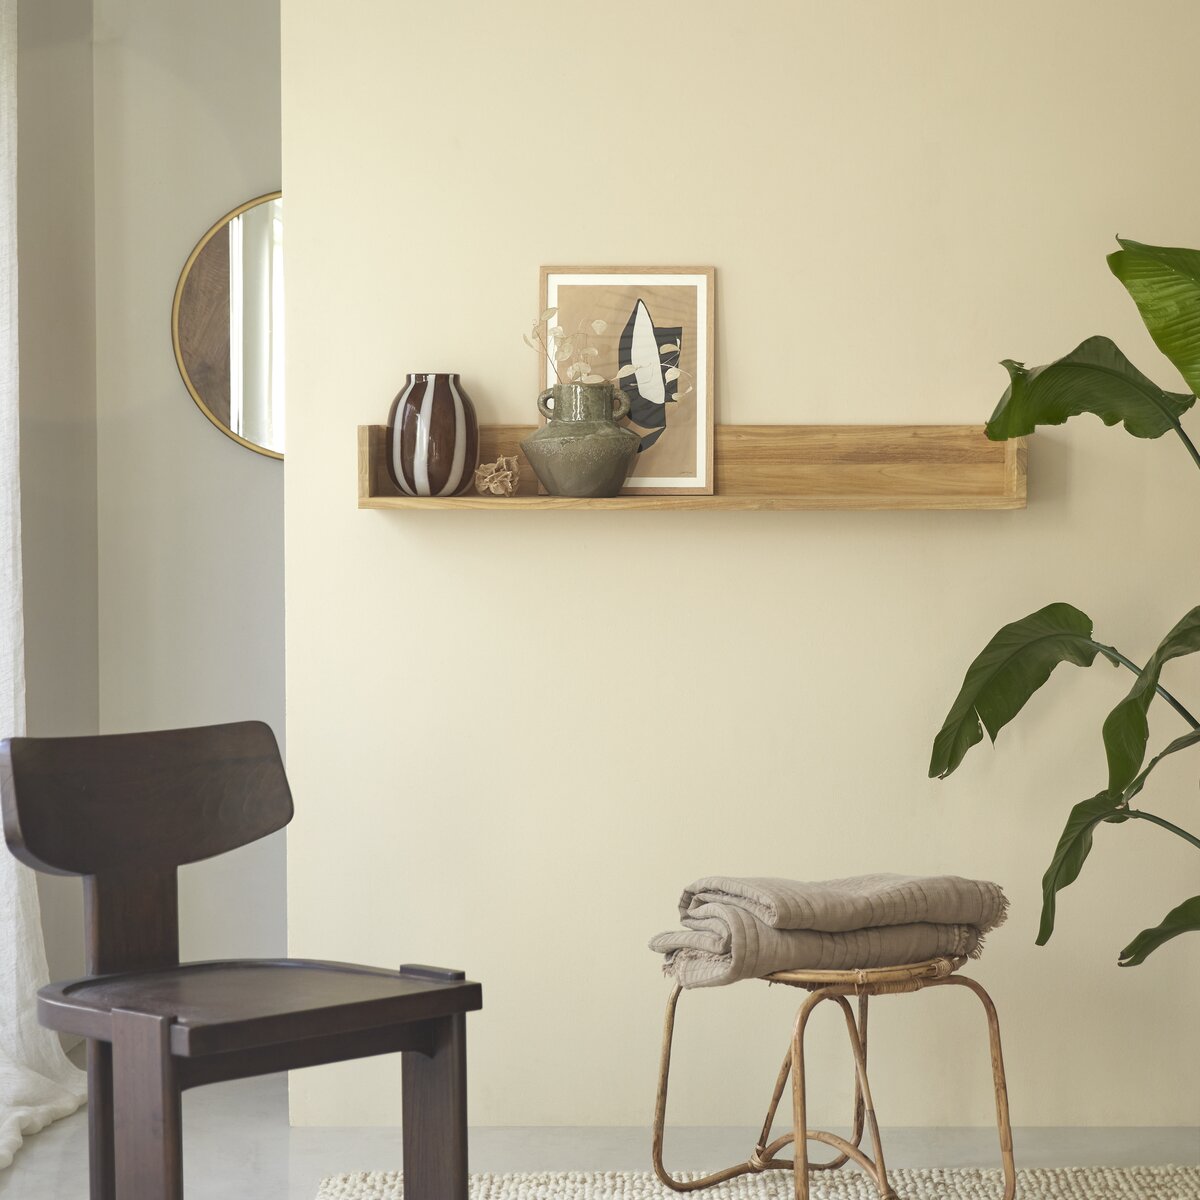 Arty - Solid teak wall-mounted Shelf